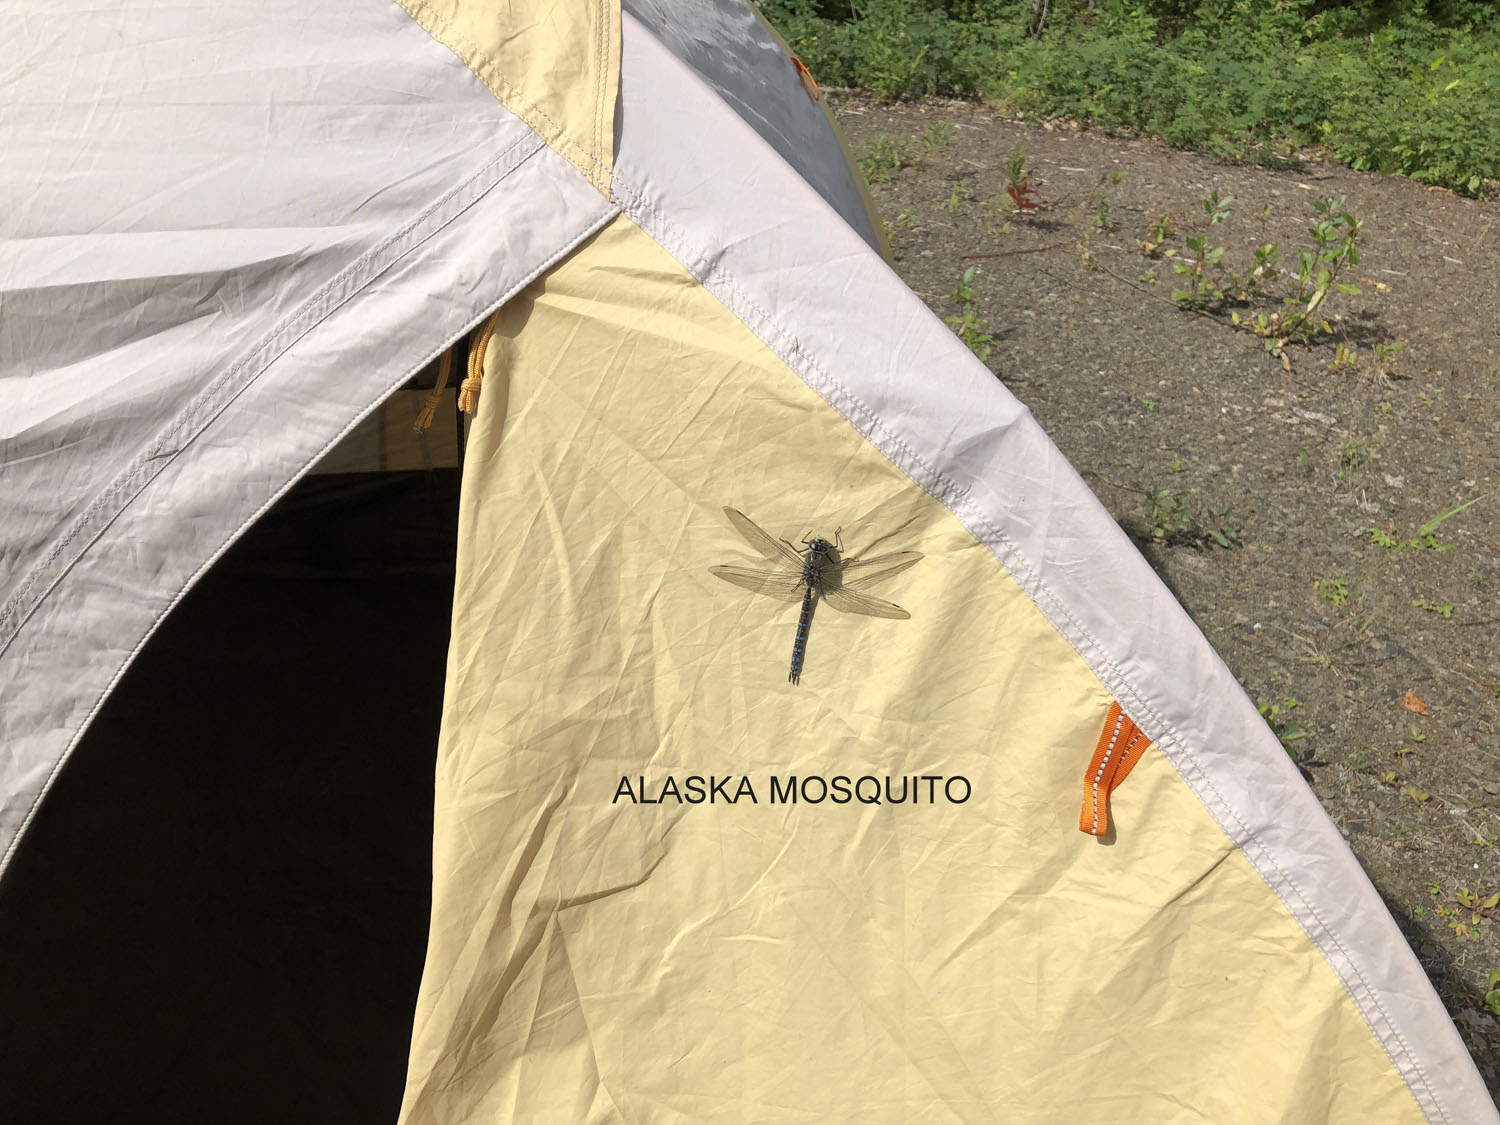 Alaska mosquito